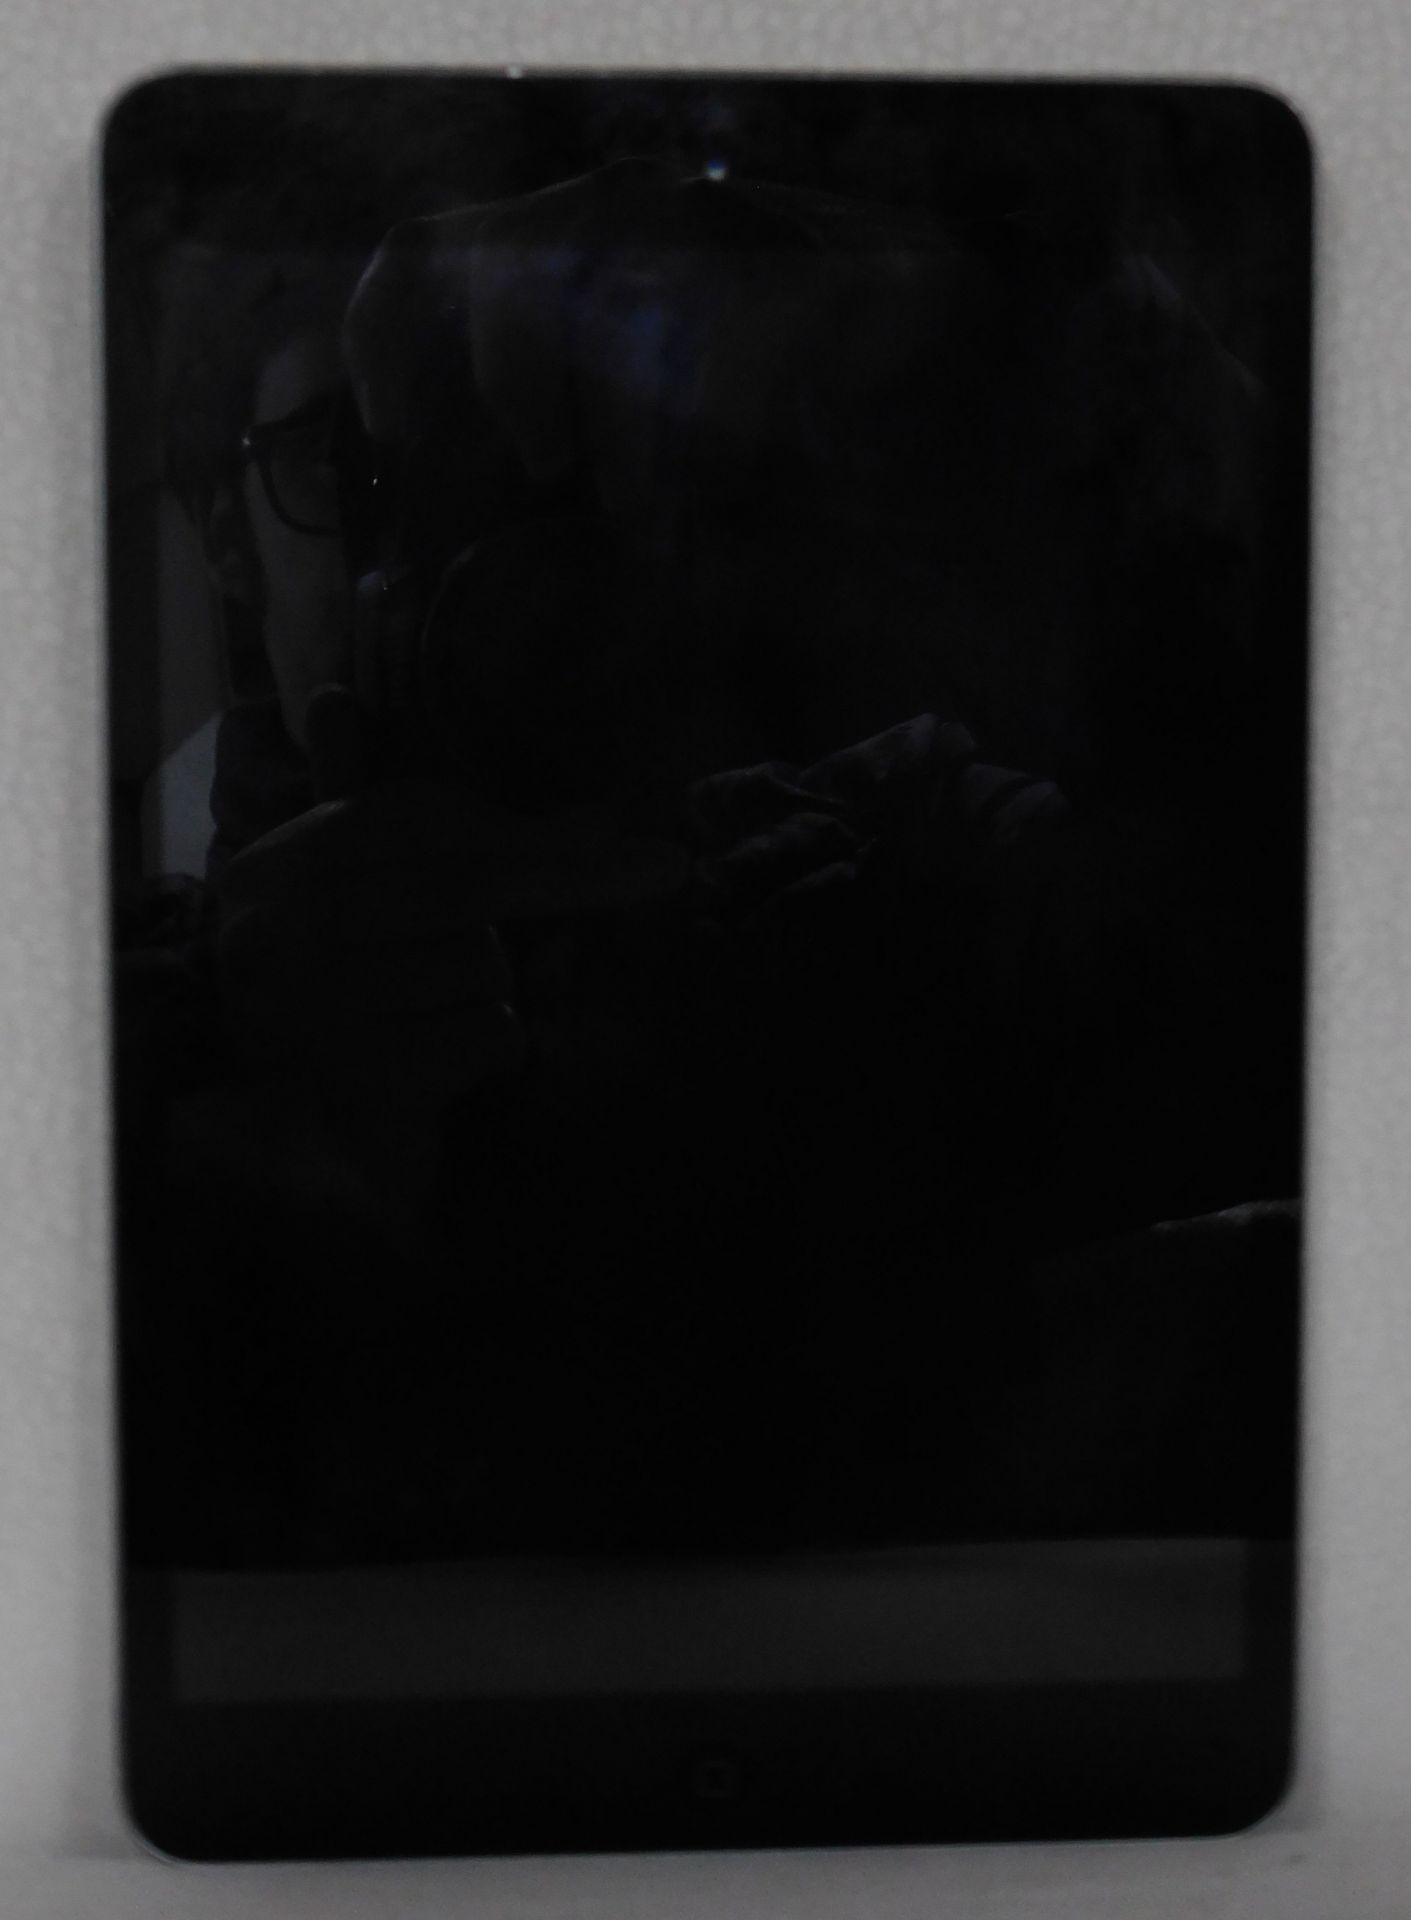 Apple iPad Mini WIFI 16GB Space Grey, Model Number: A1432, Serial Number: F7MMGBKDFP84 (Engraved